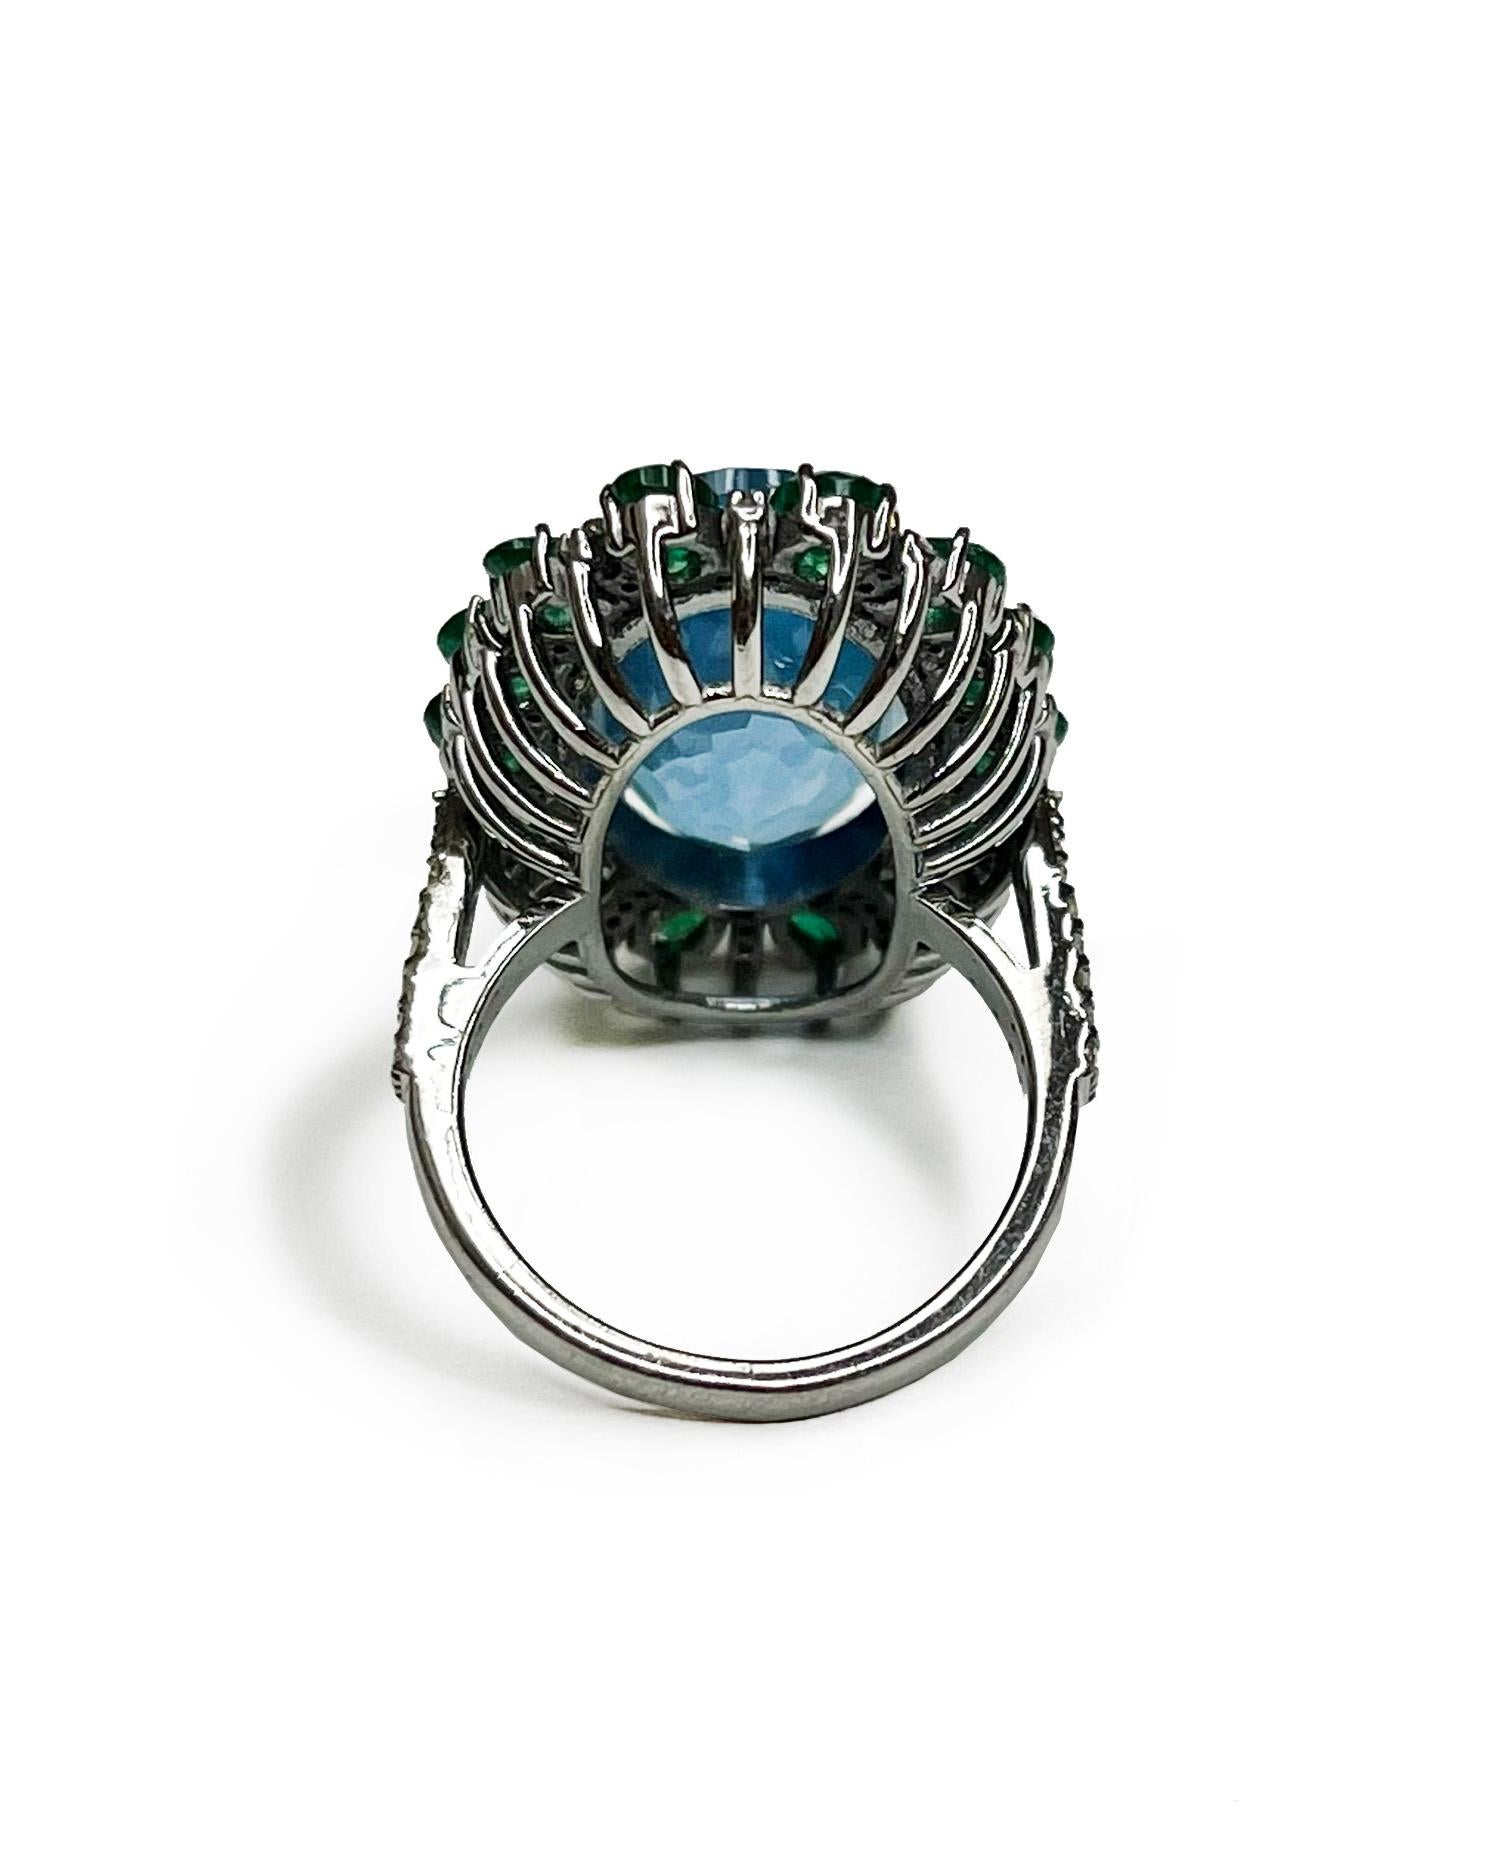 Oval Cut Majesty Ring in 14k White Gold, Aquamarine, Emerald and White Diamonds